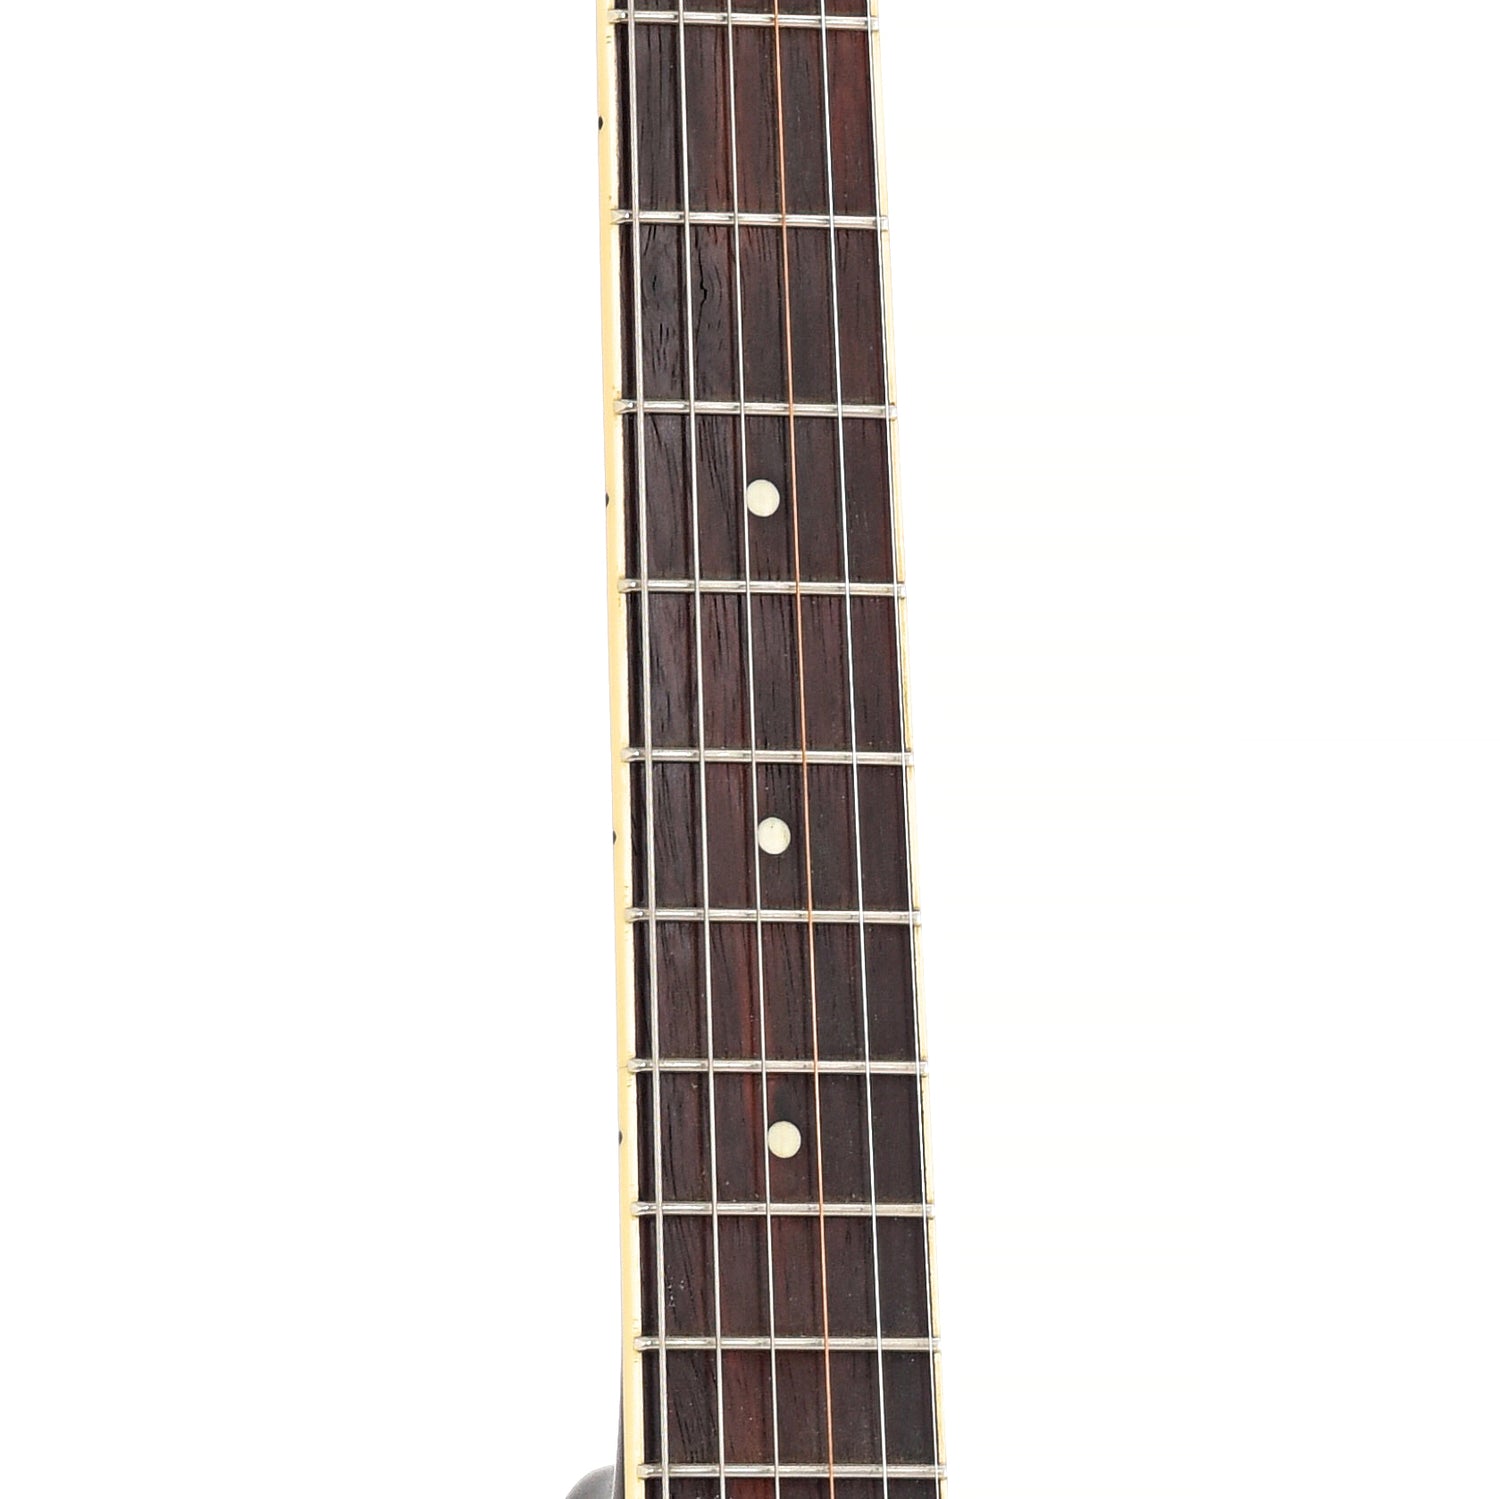 Fretboard of Gretsch G9240 "Alligator" Resonator Guitar